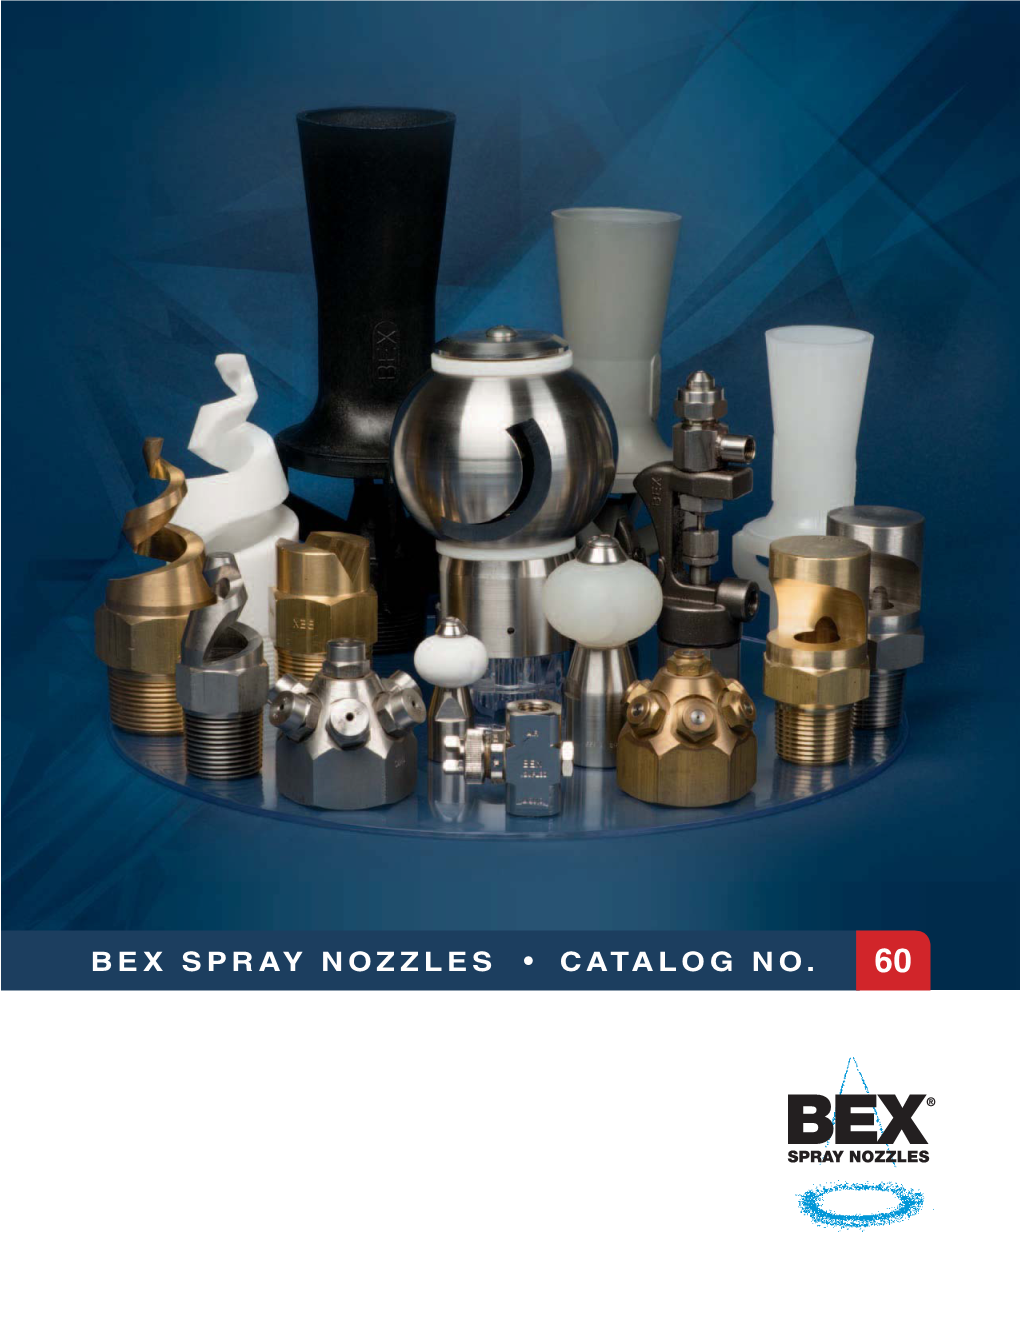 Bex Spray Nozzles • Catalog